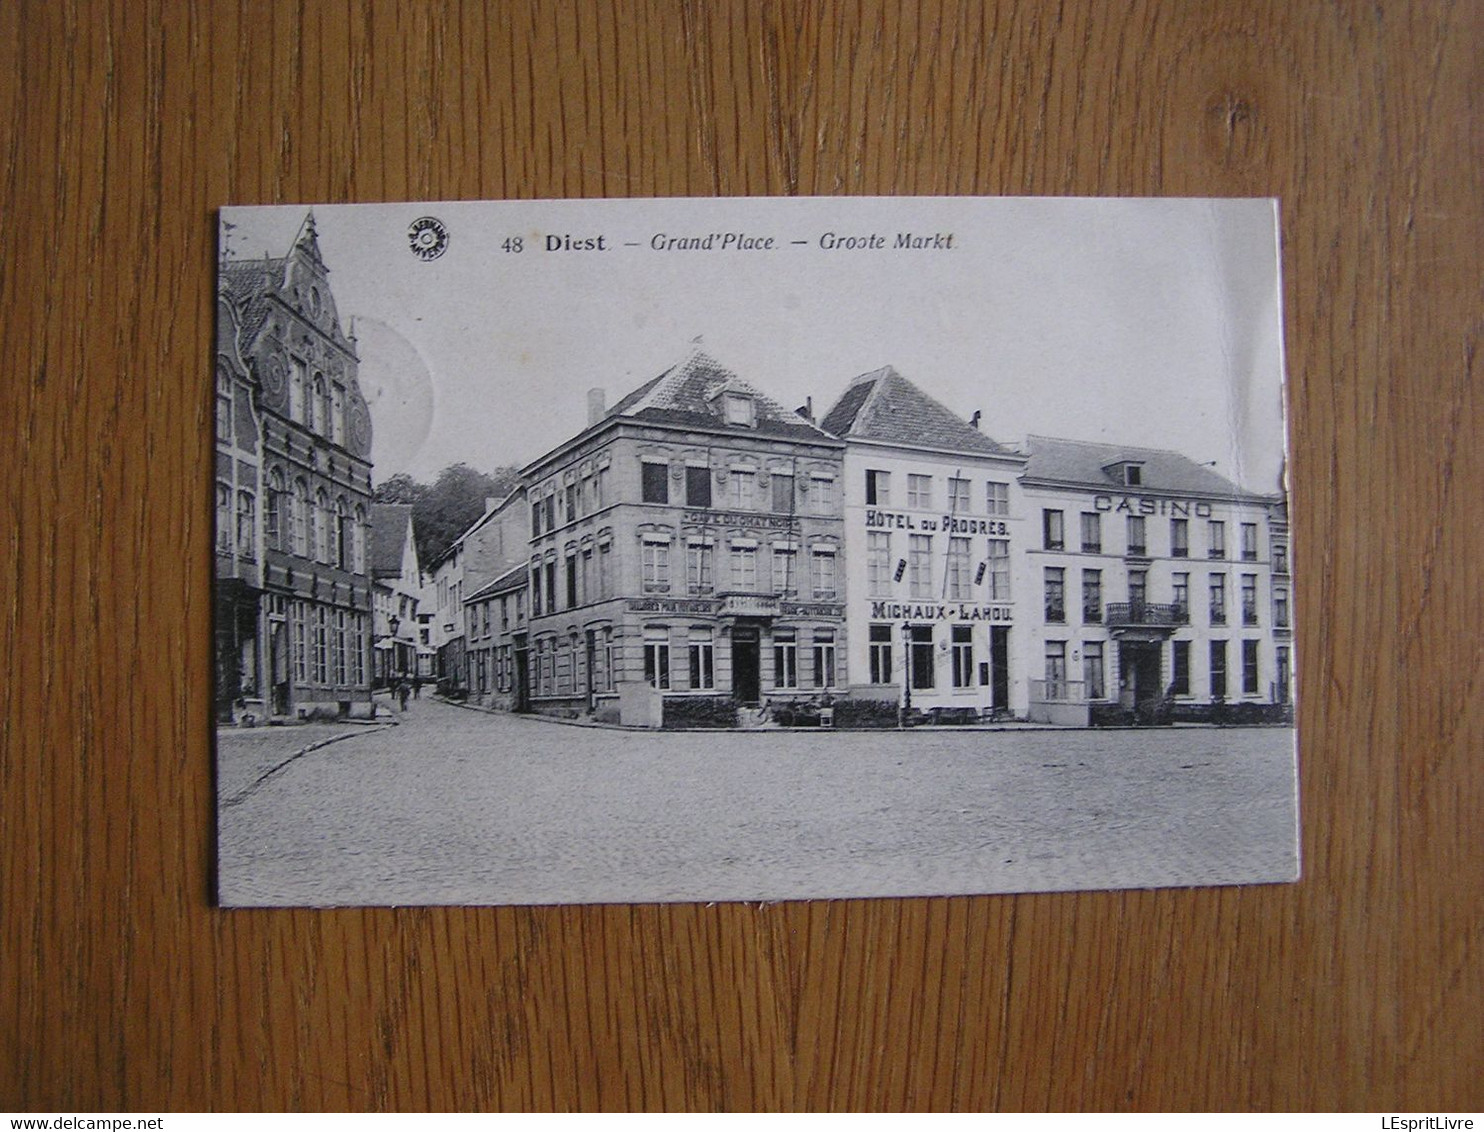 DIEST Groote Markt Grand Place Brabant Flamand Vlaams Brabant  België Belgique Carte Postale Post Card - Diest